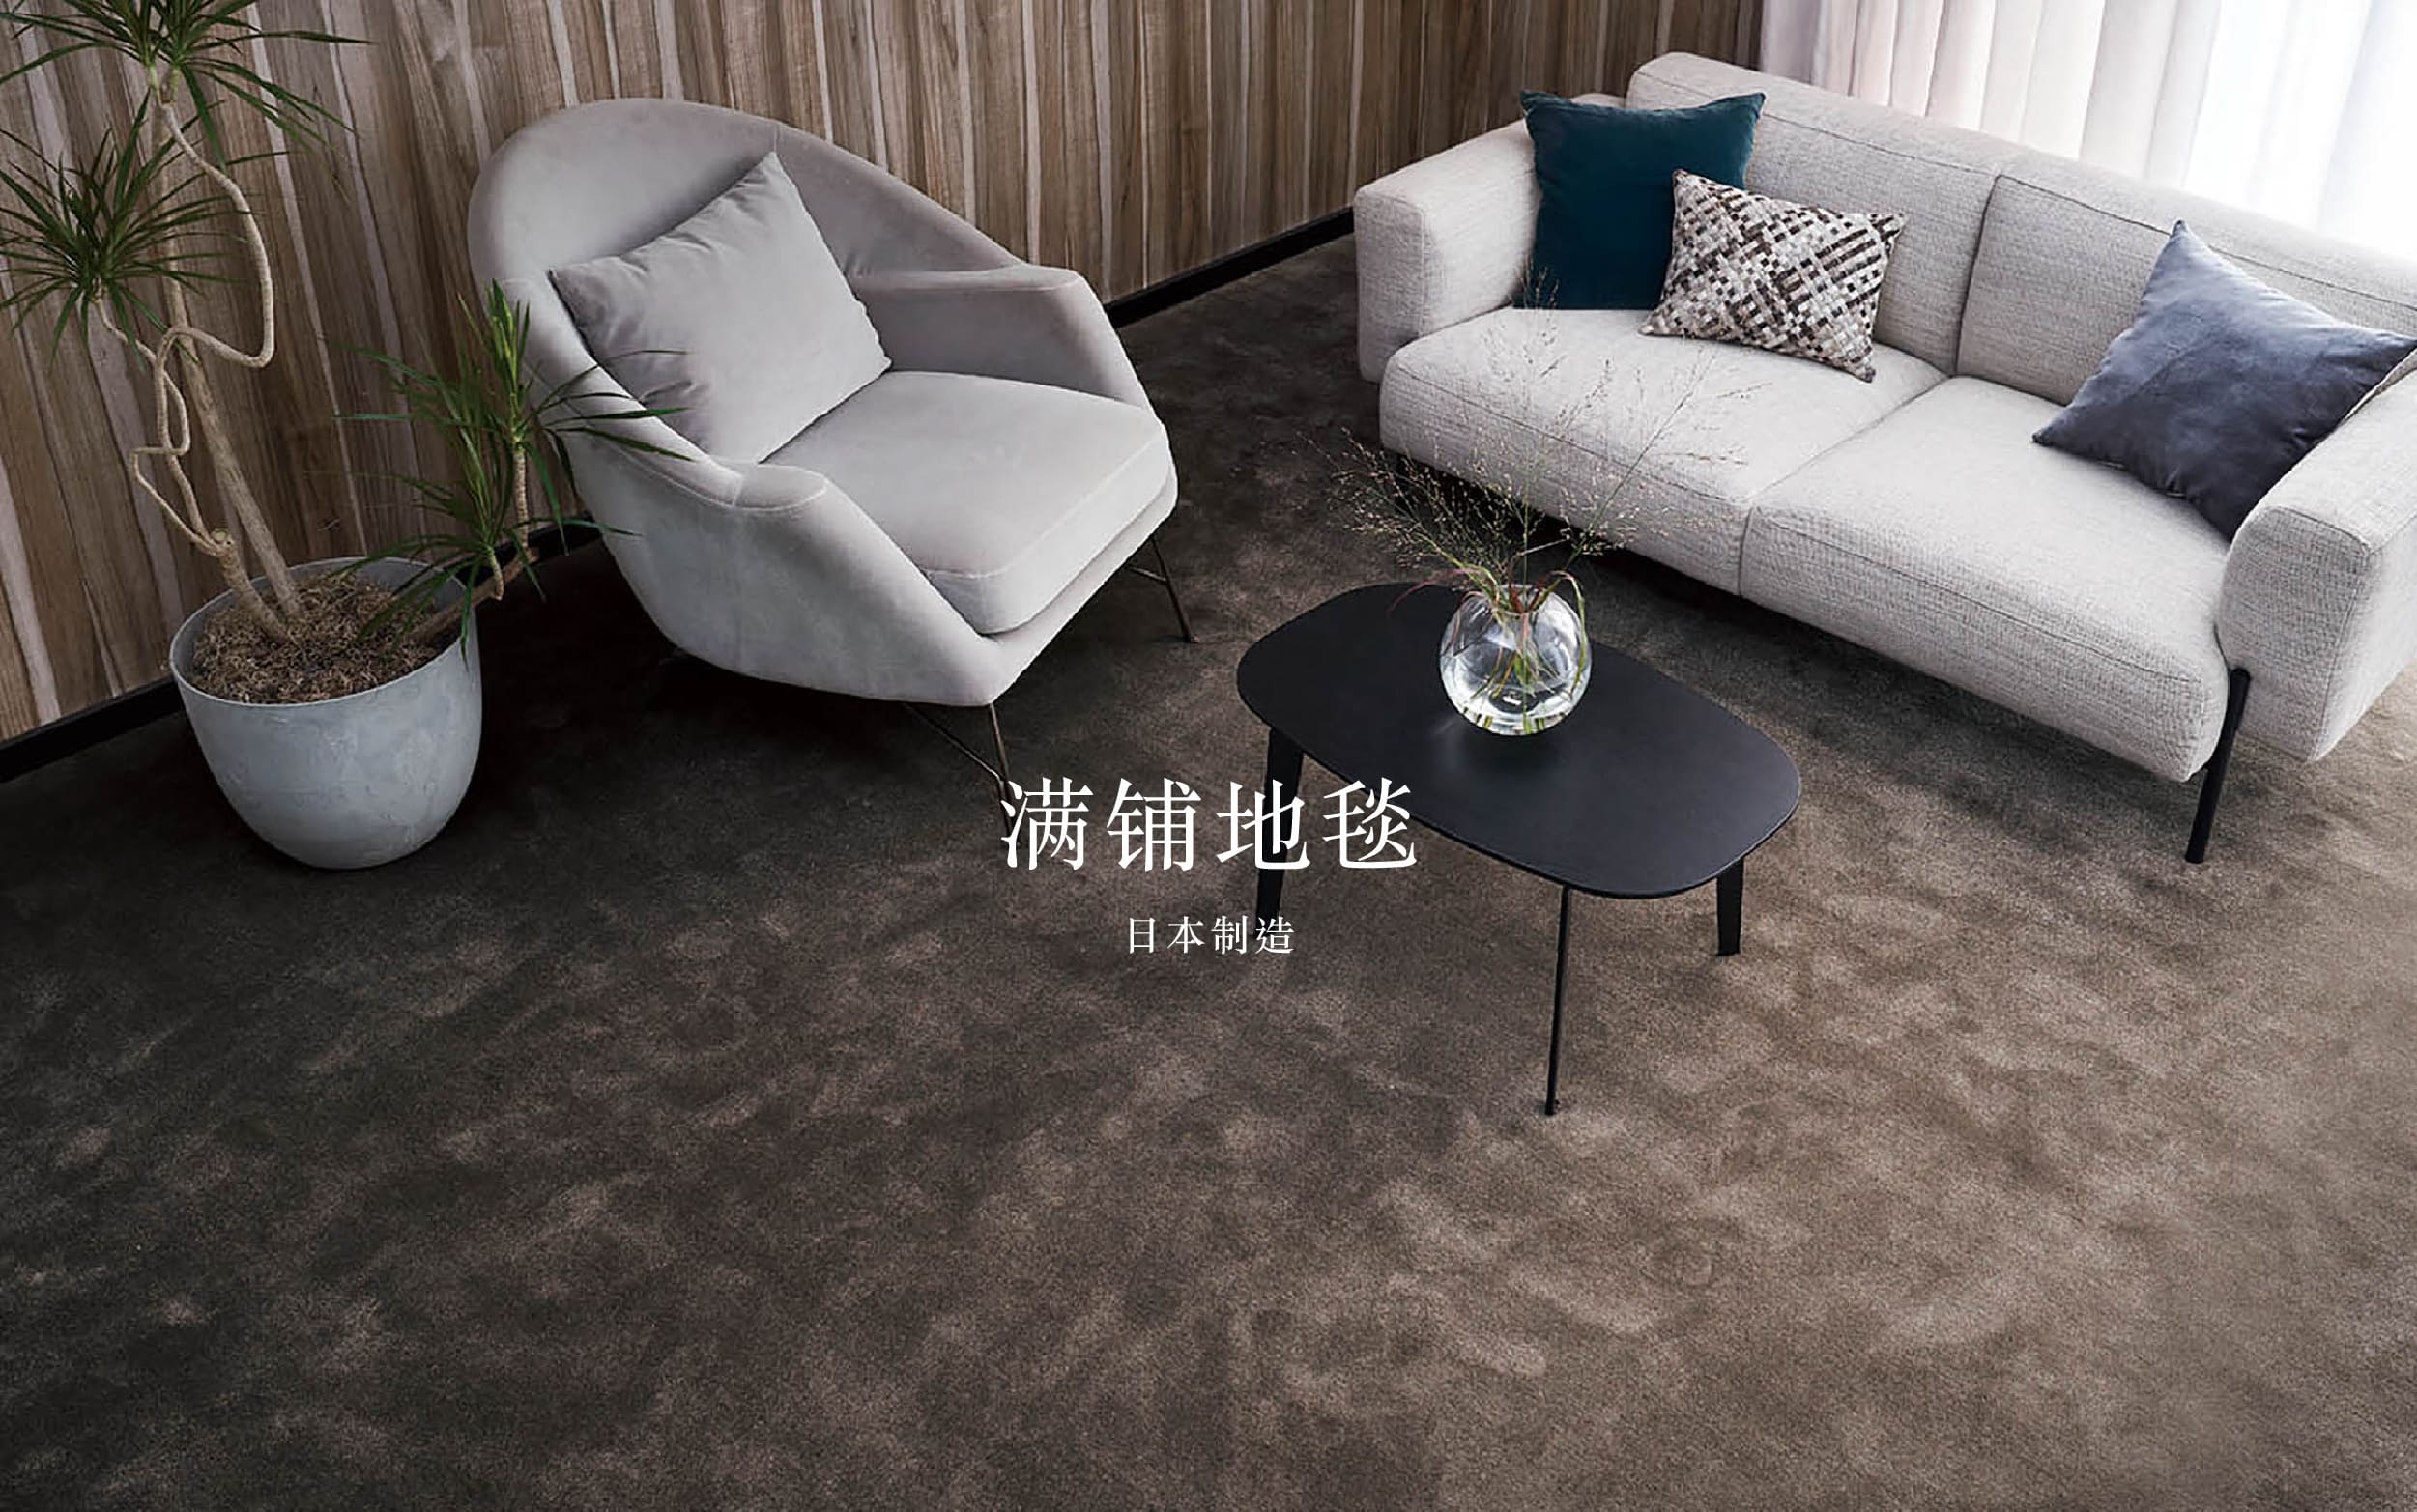 Tat Ming Flooring Carpet